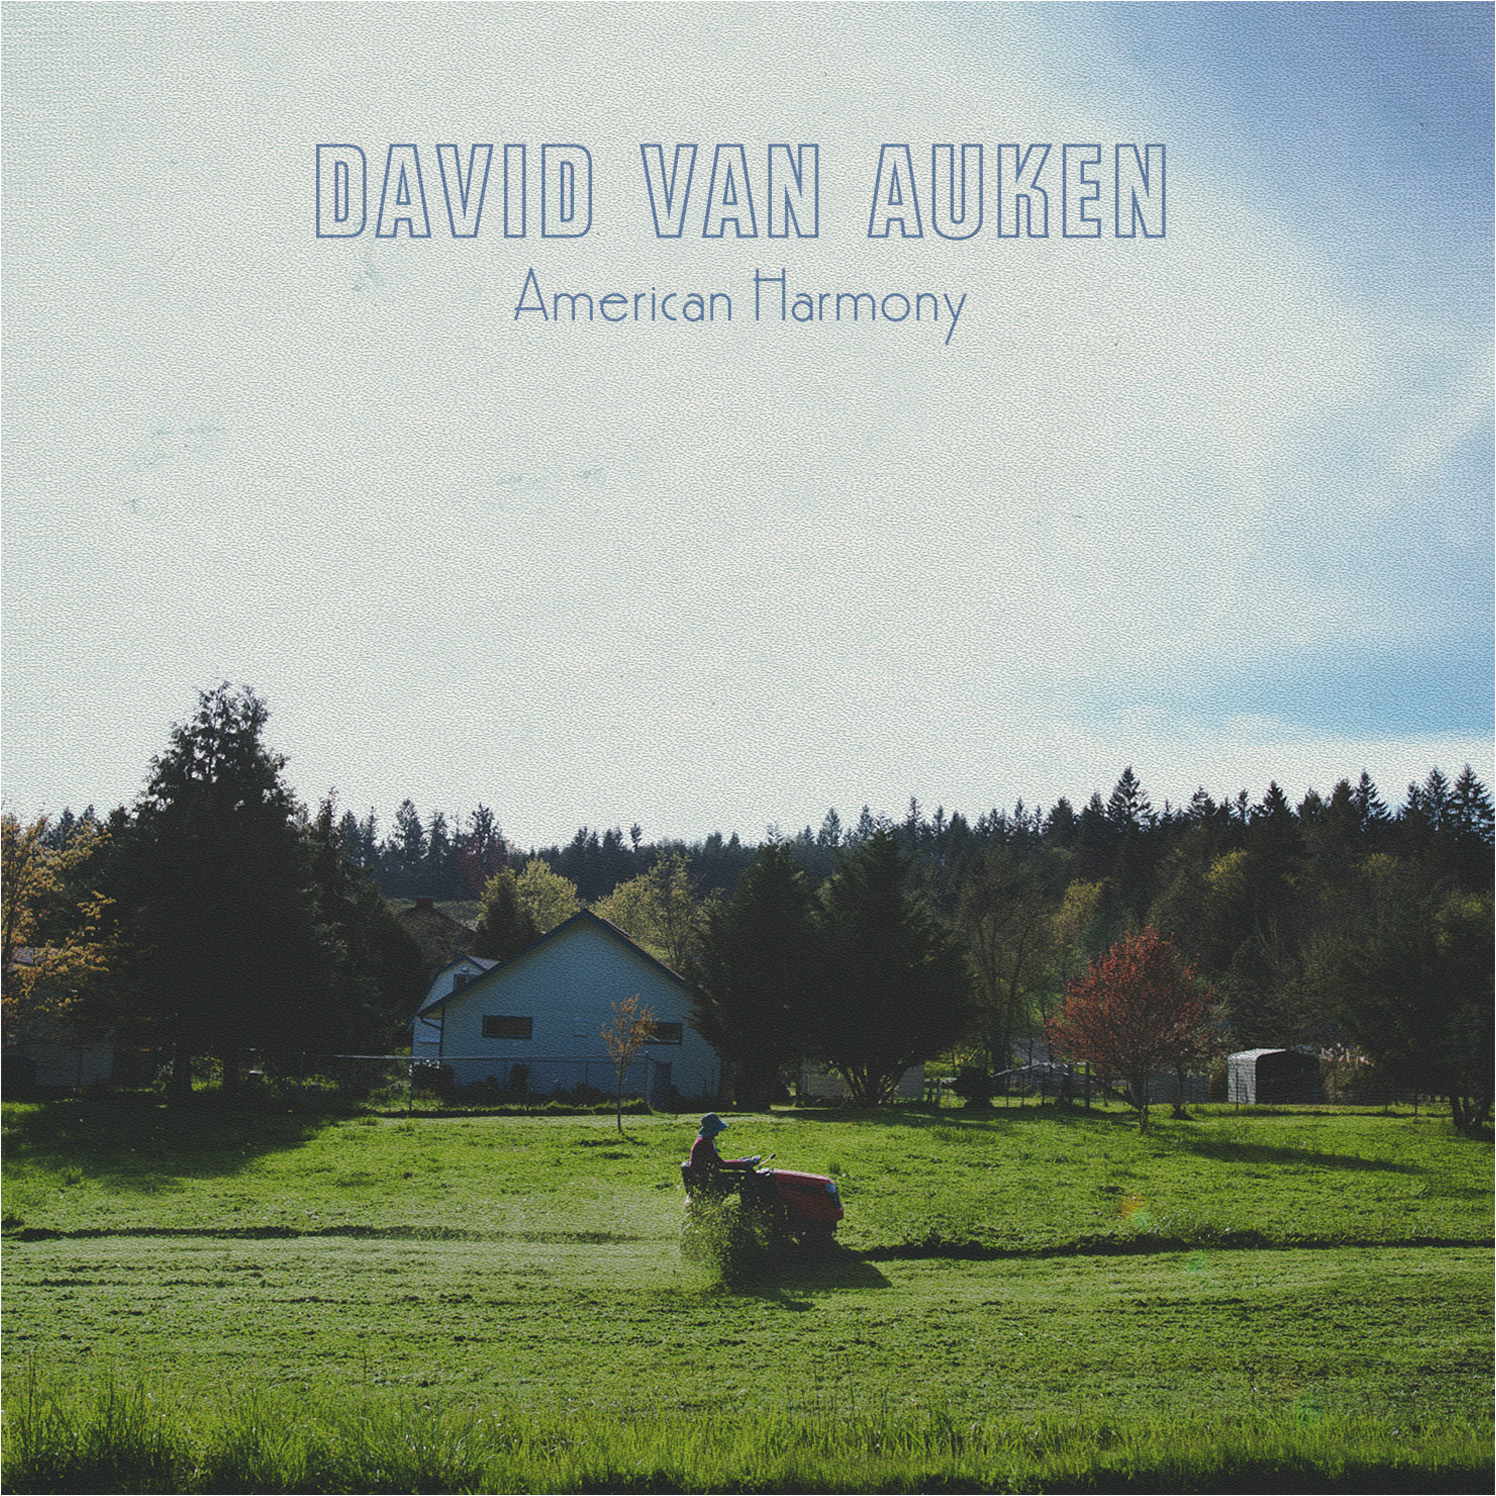 REVIEW: American Harmony by David Van Auken